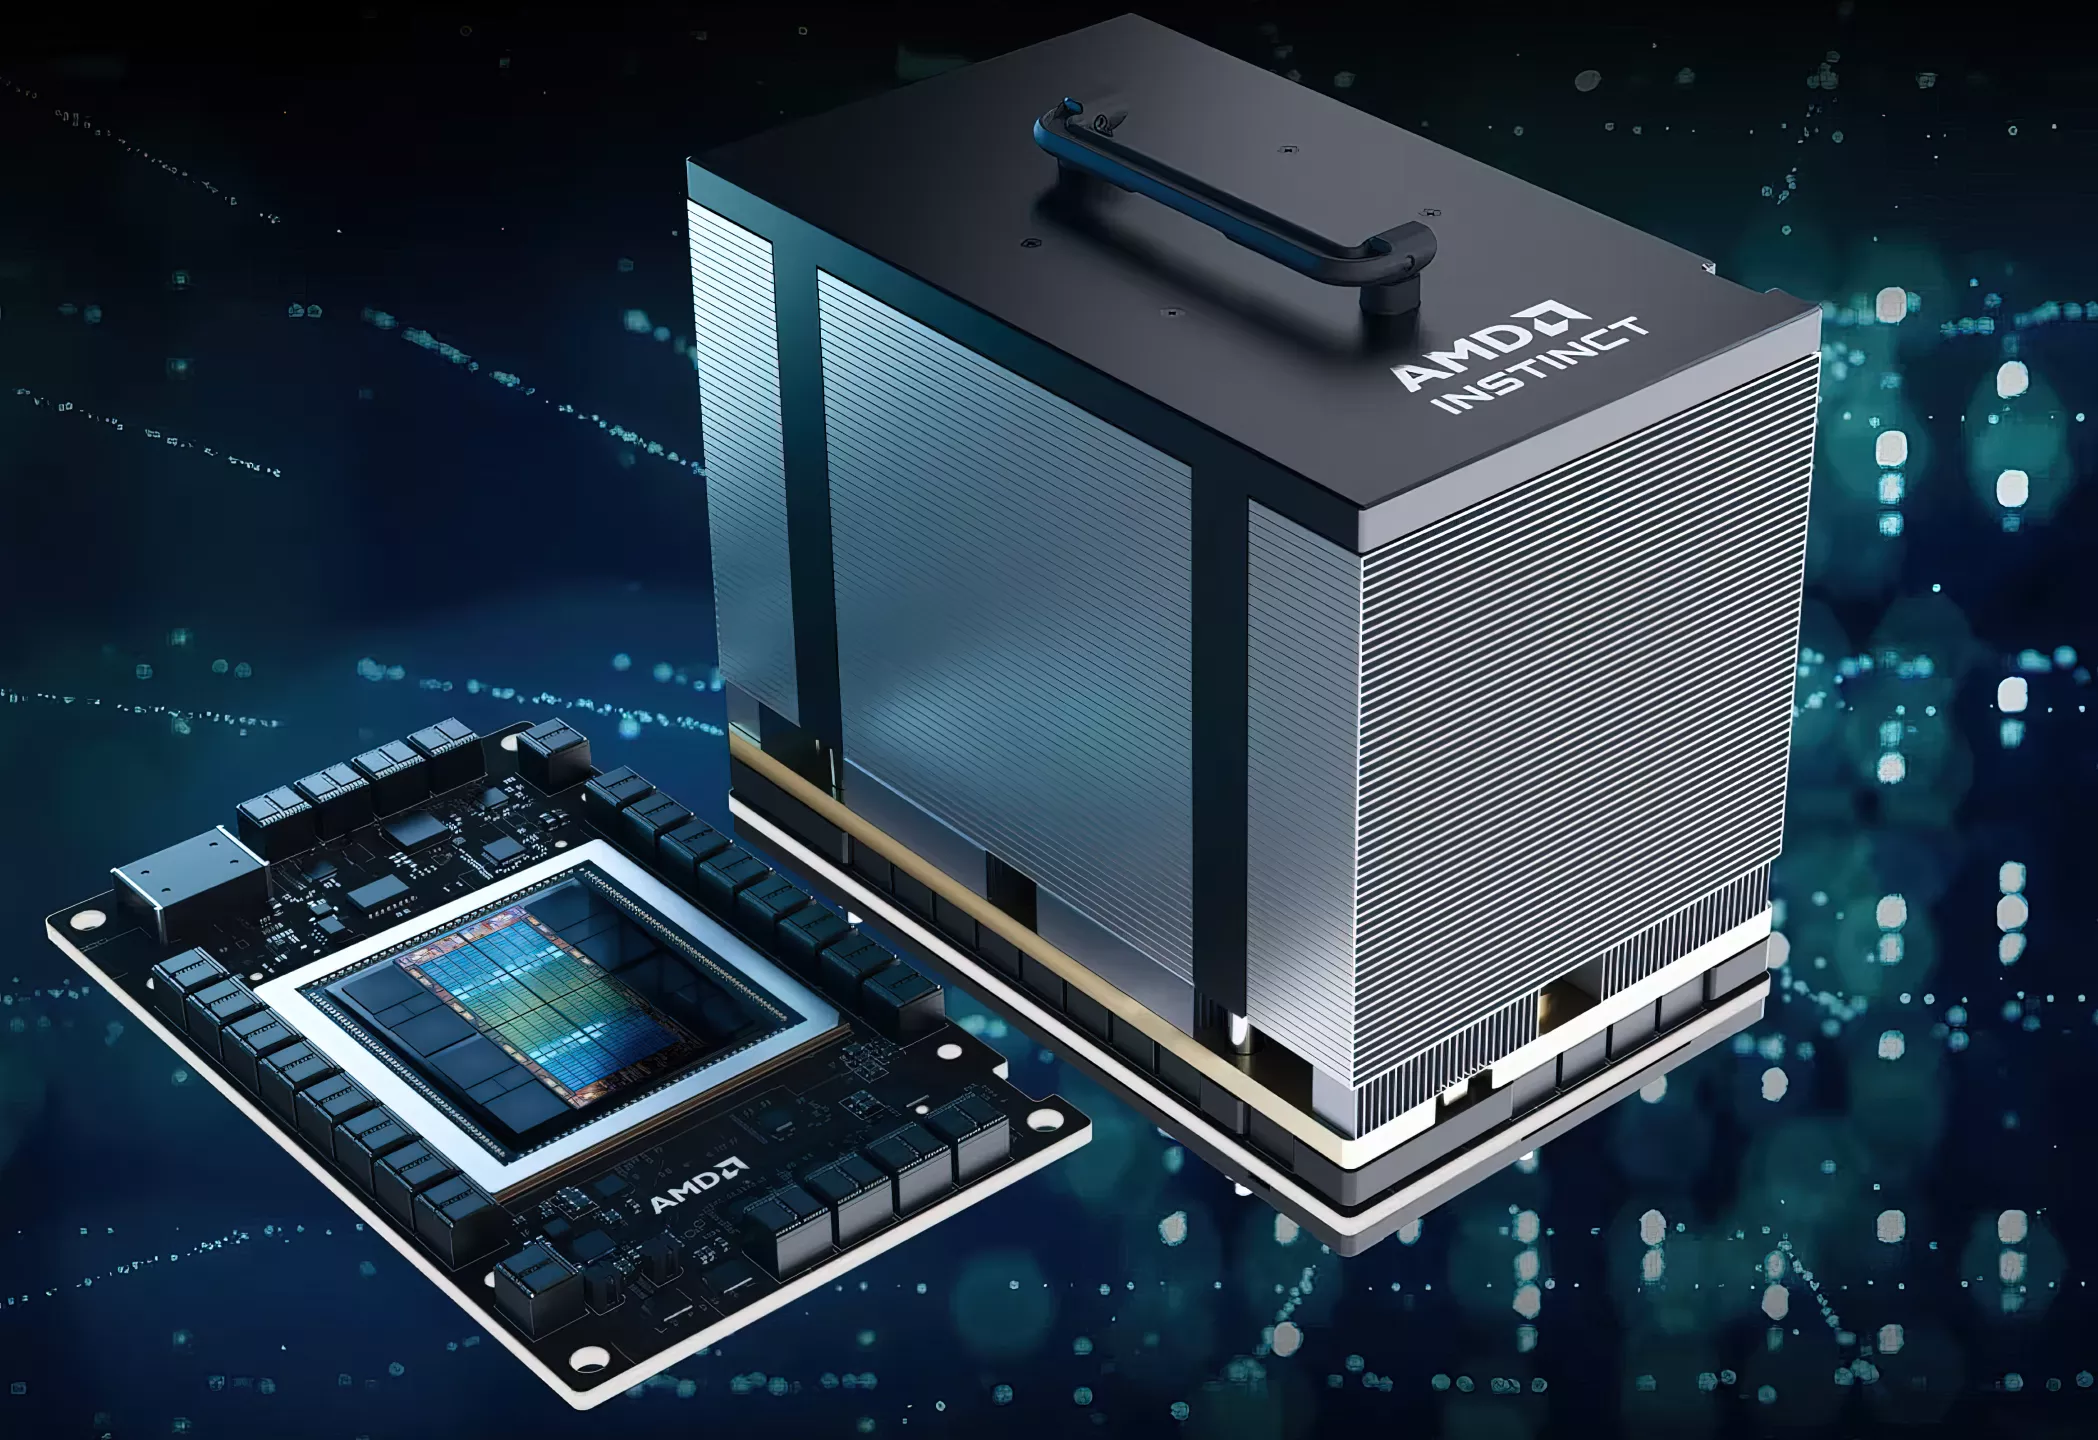 AMD's take on AI: Instinct MI300X combines GPU cores with 192 GB of HBM3 memory